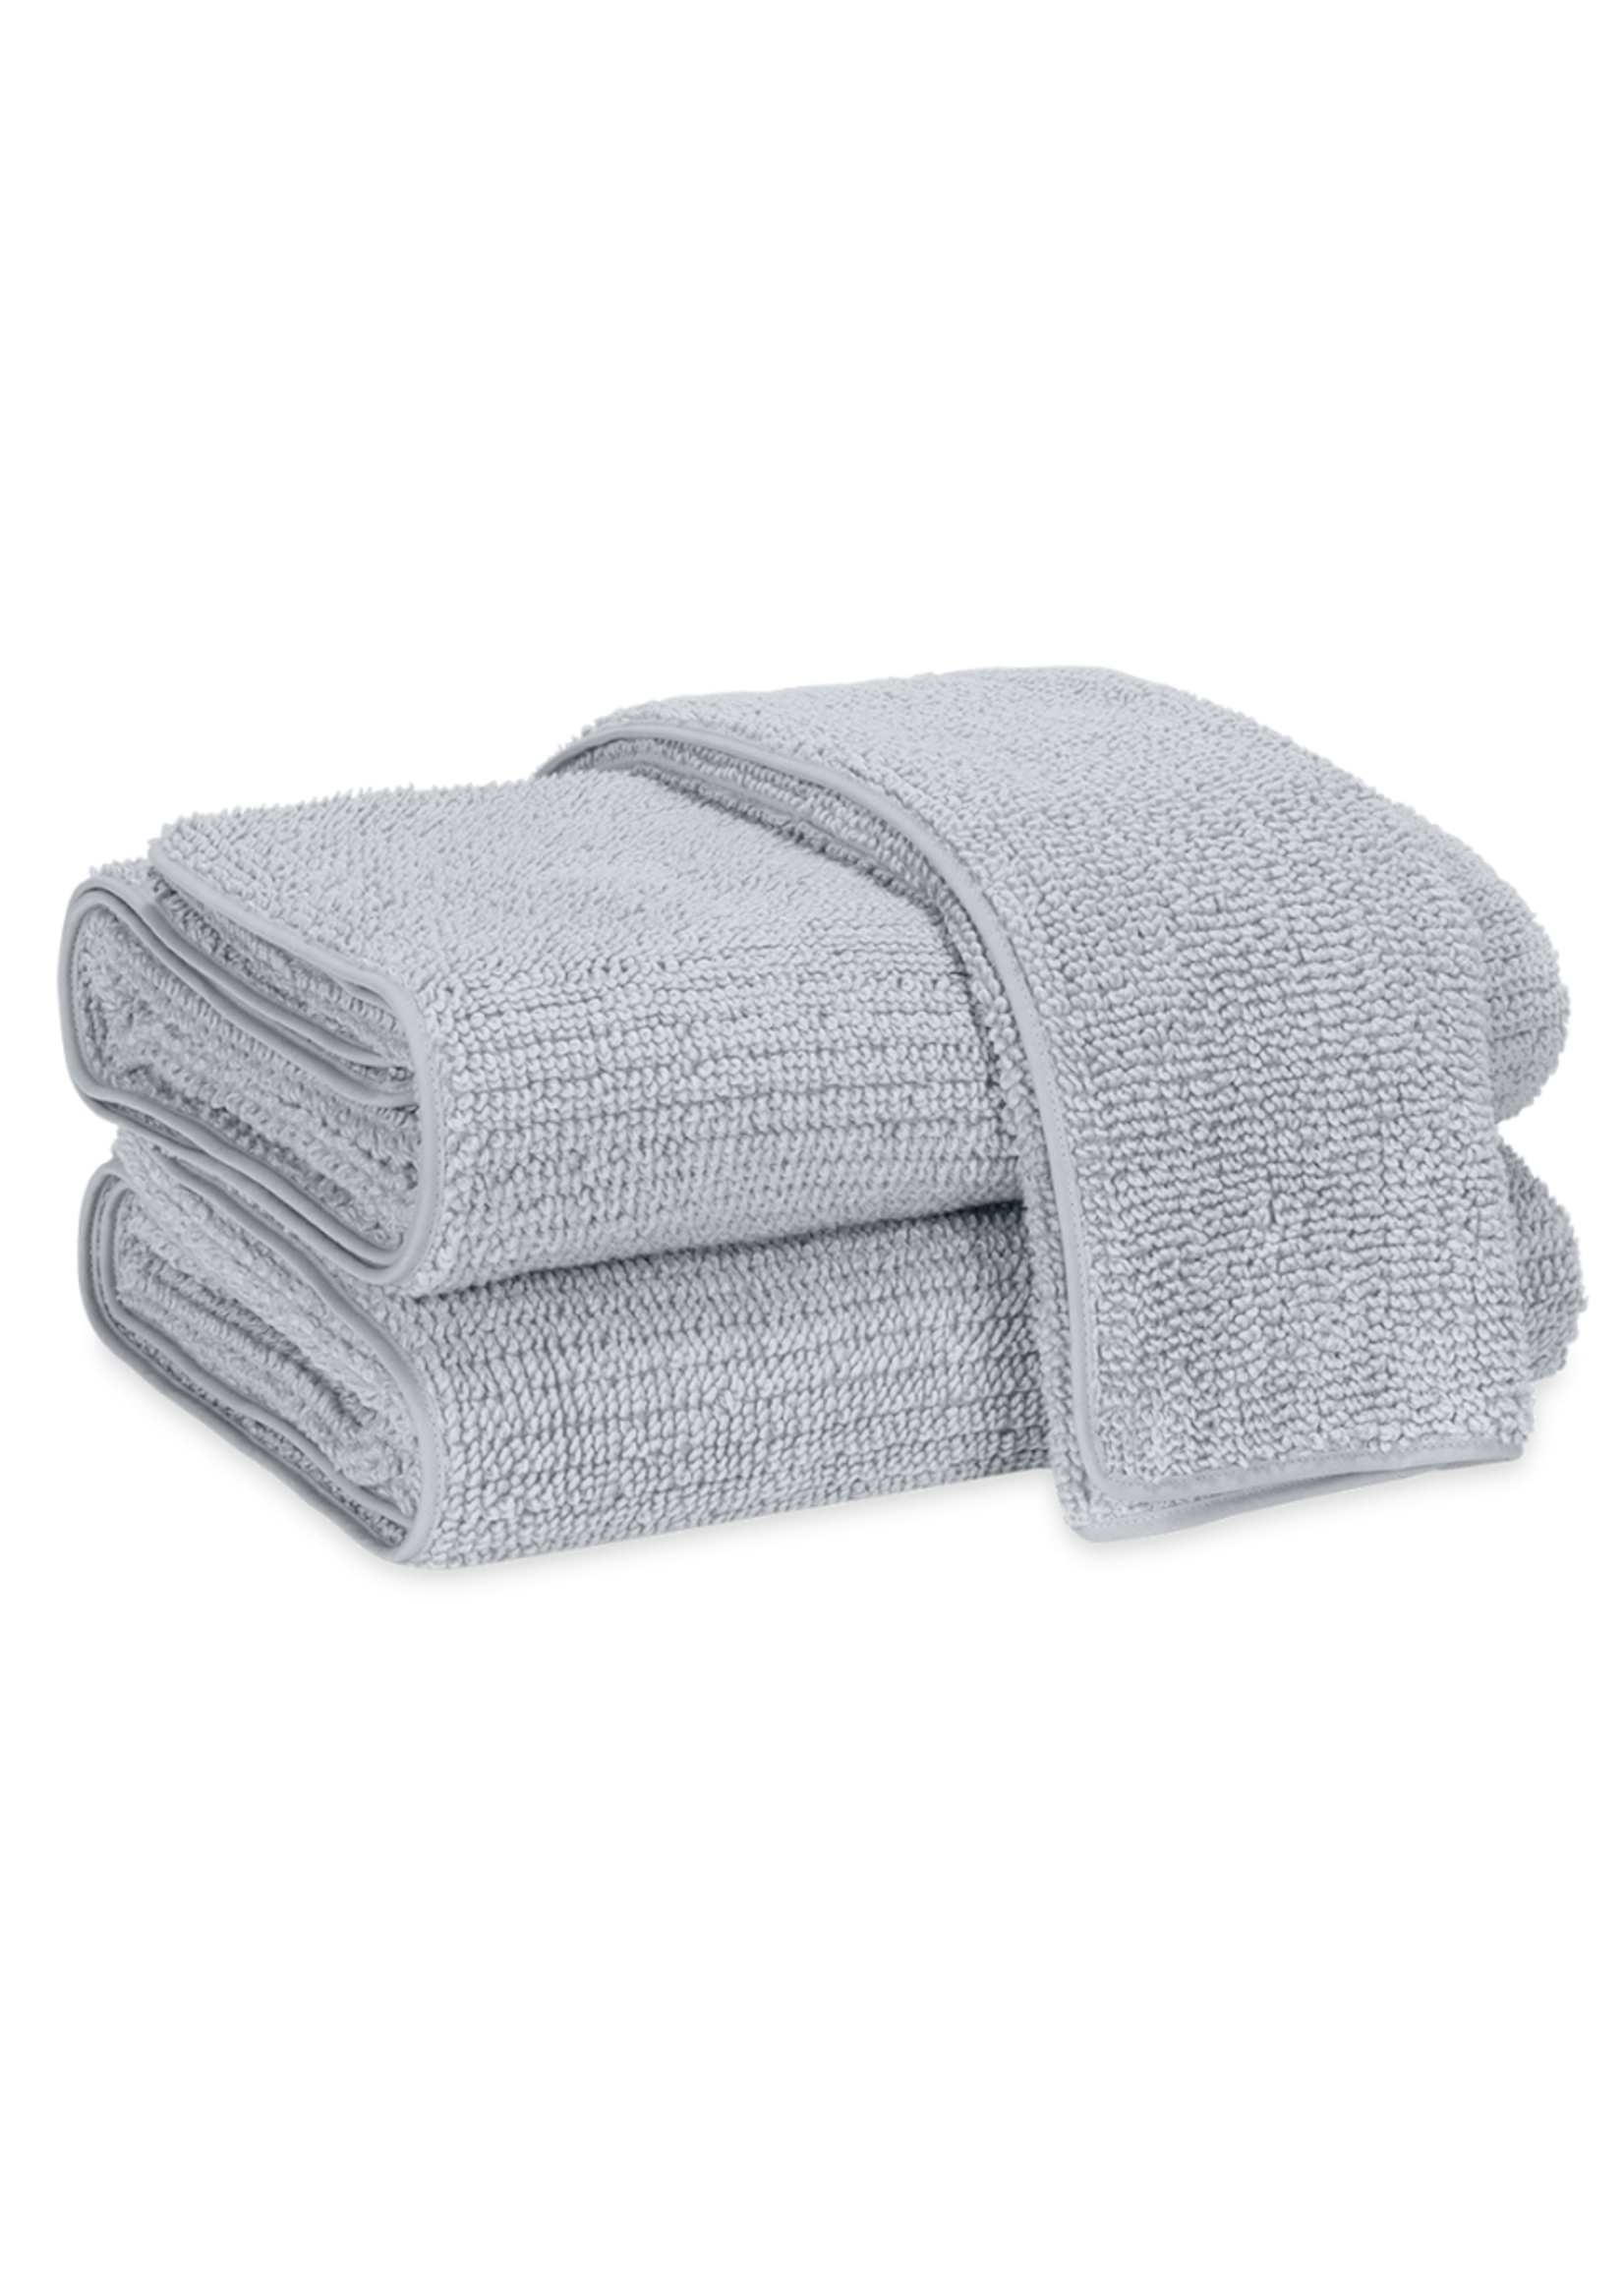 Matouk Matouk Francisco Towels